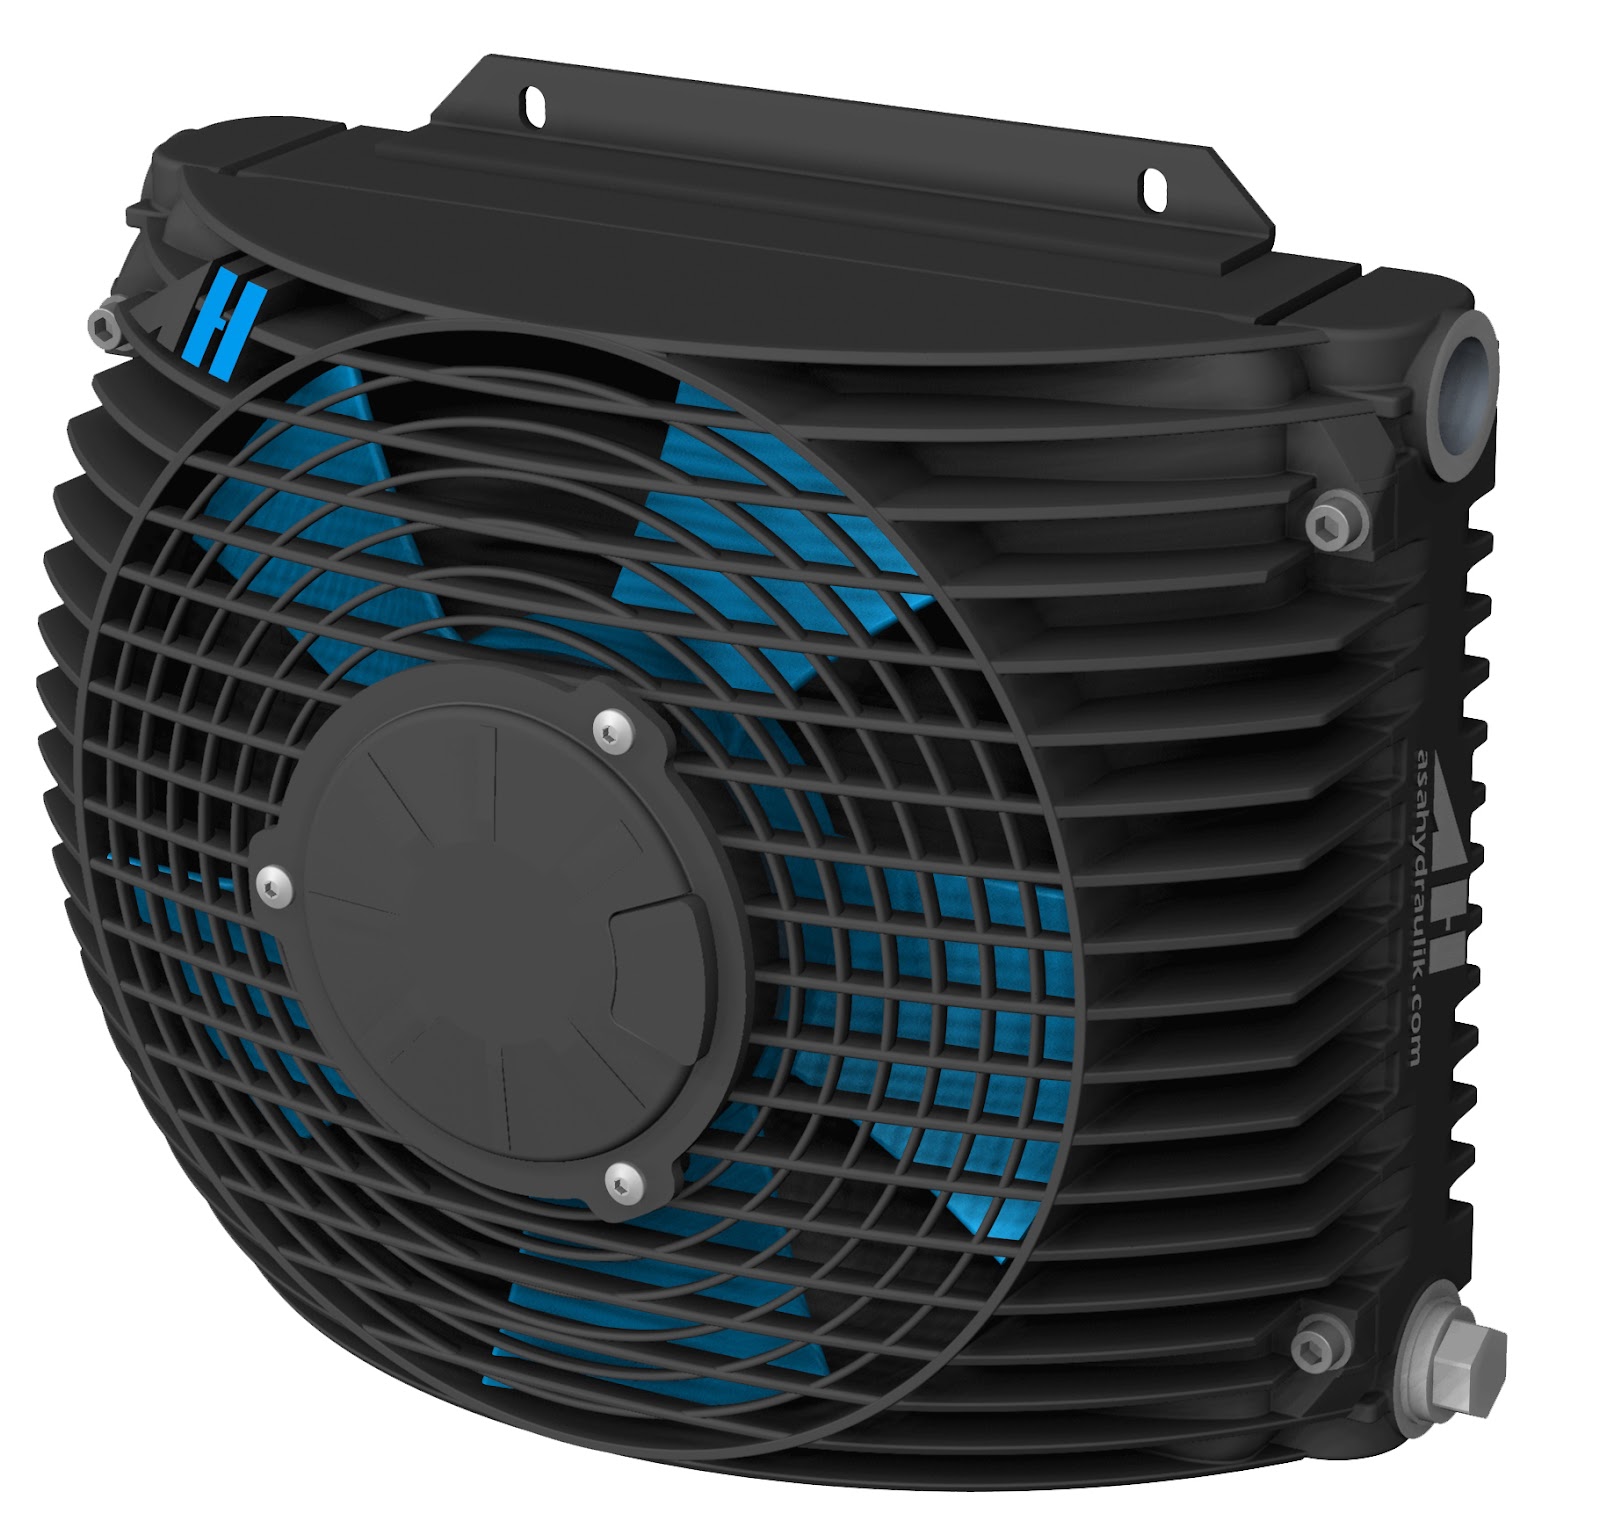 Transmission or hydraulic oil fan cooler